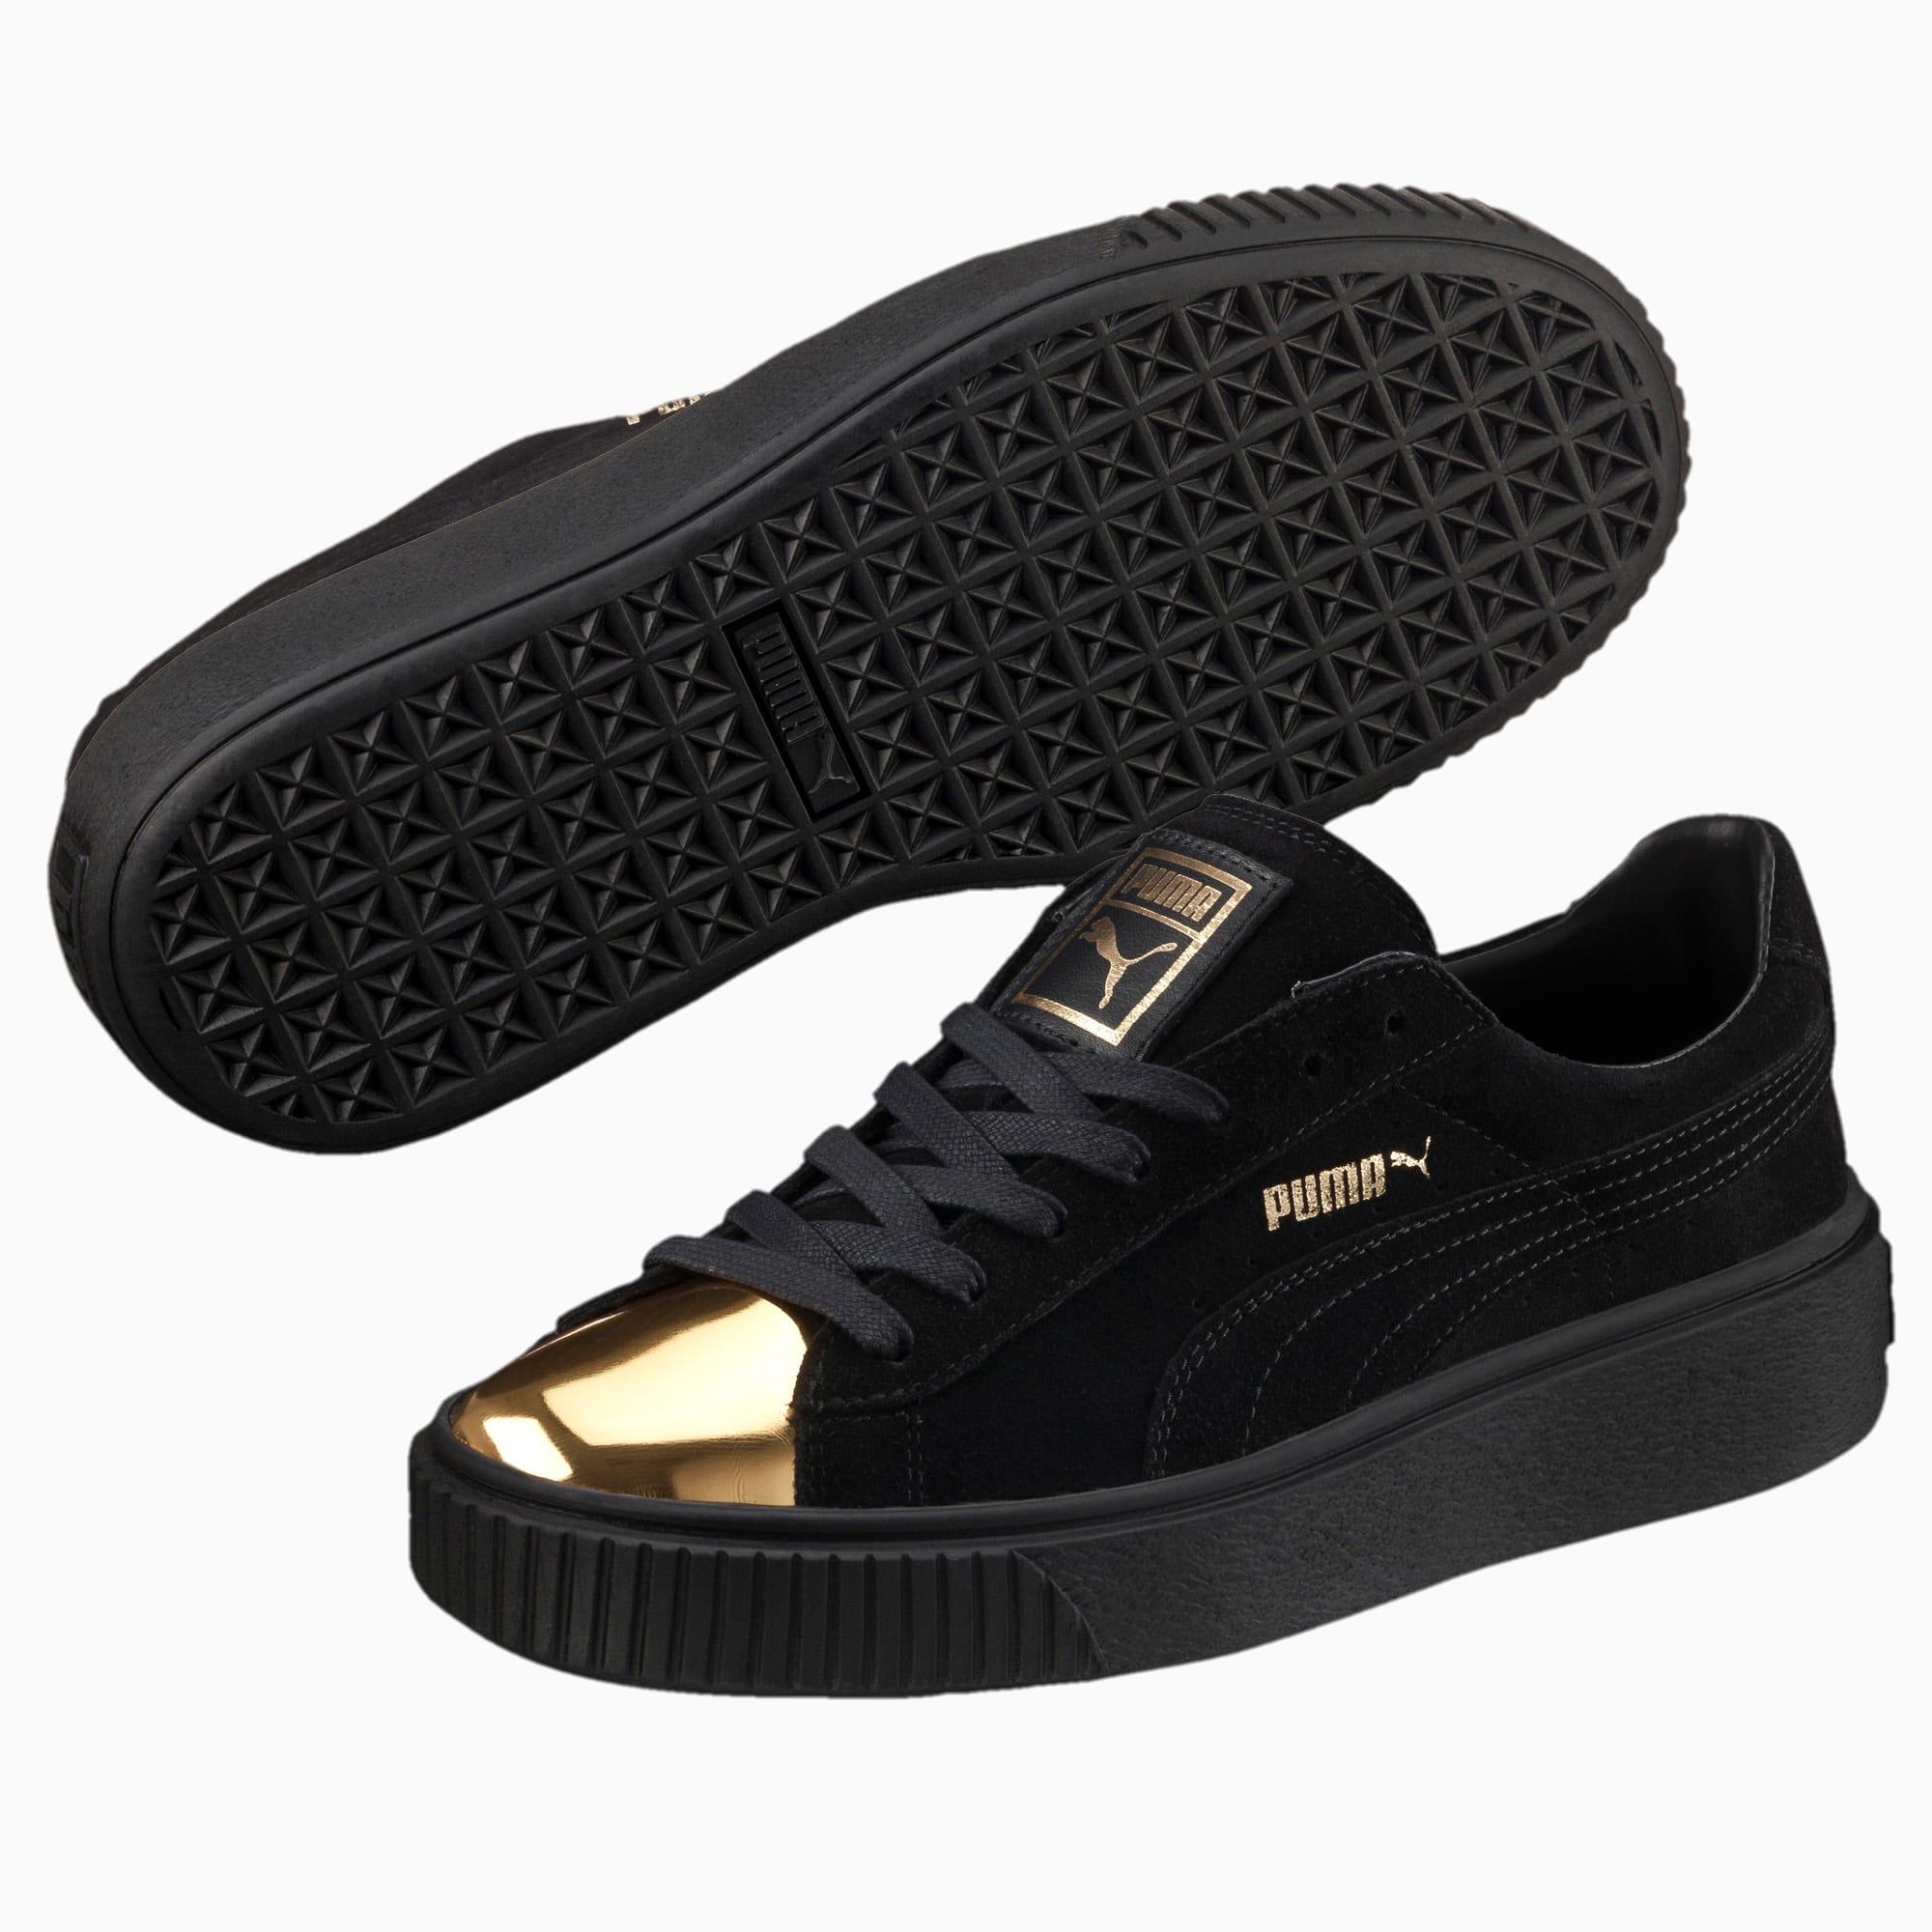 puma gold black shoes